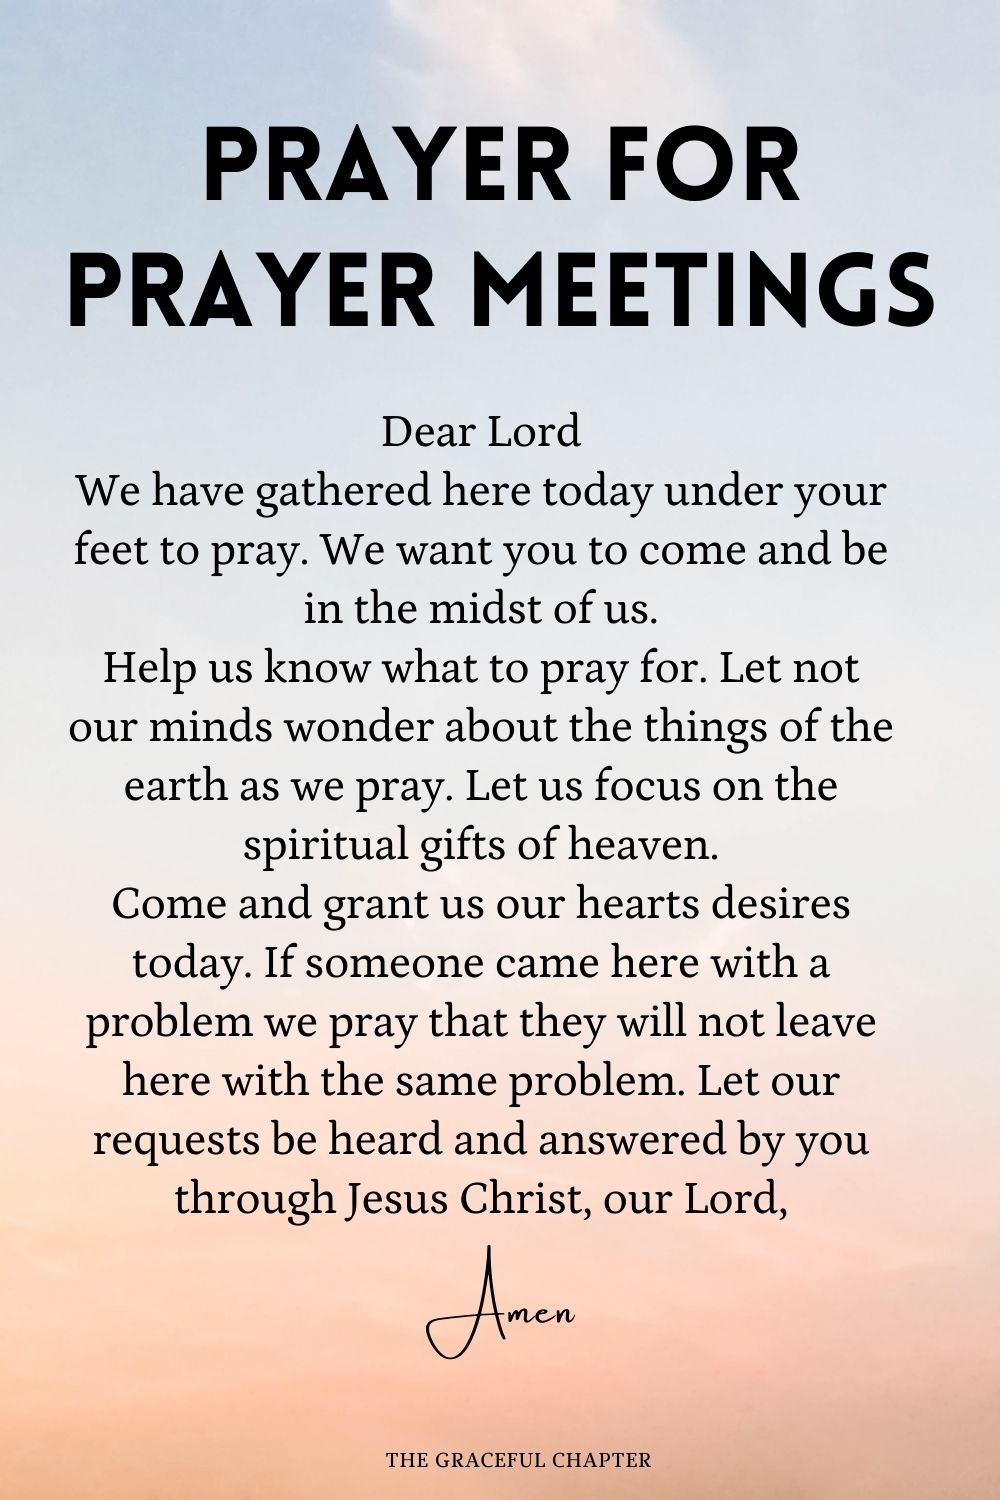 Prayer for Political Meetings